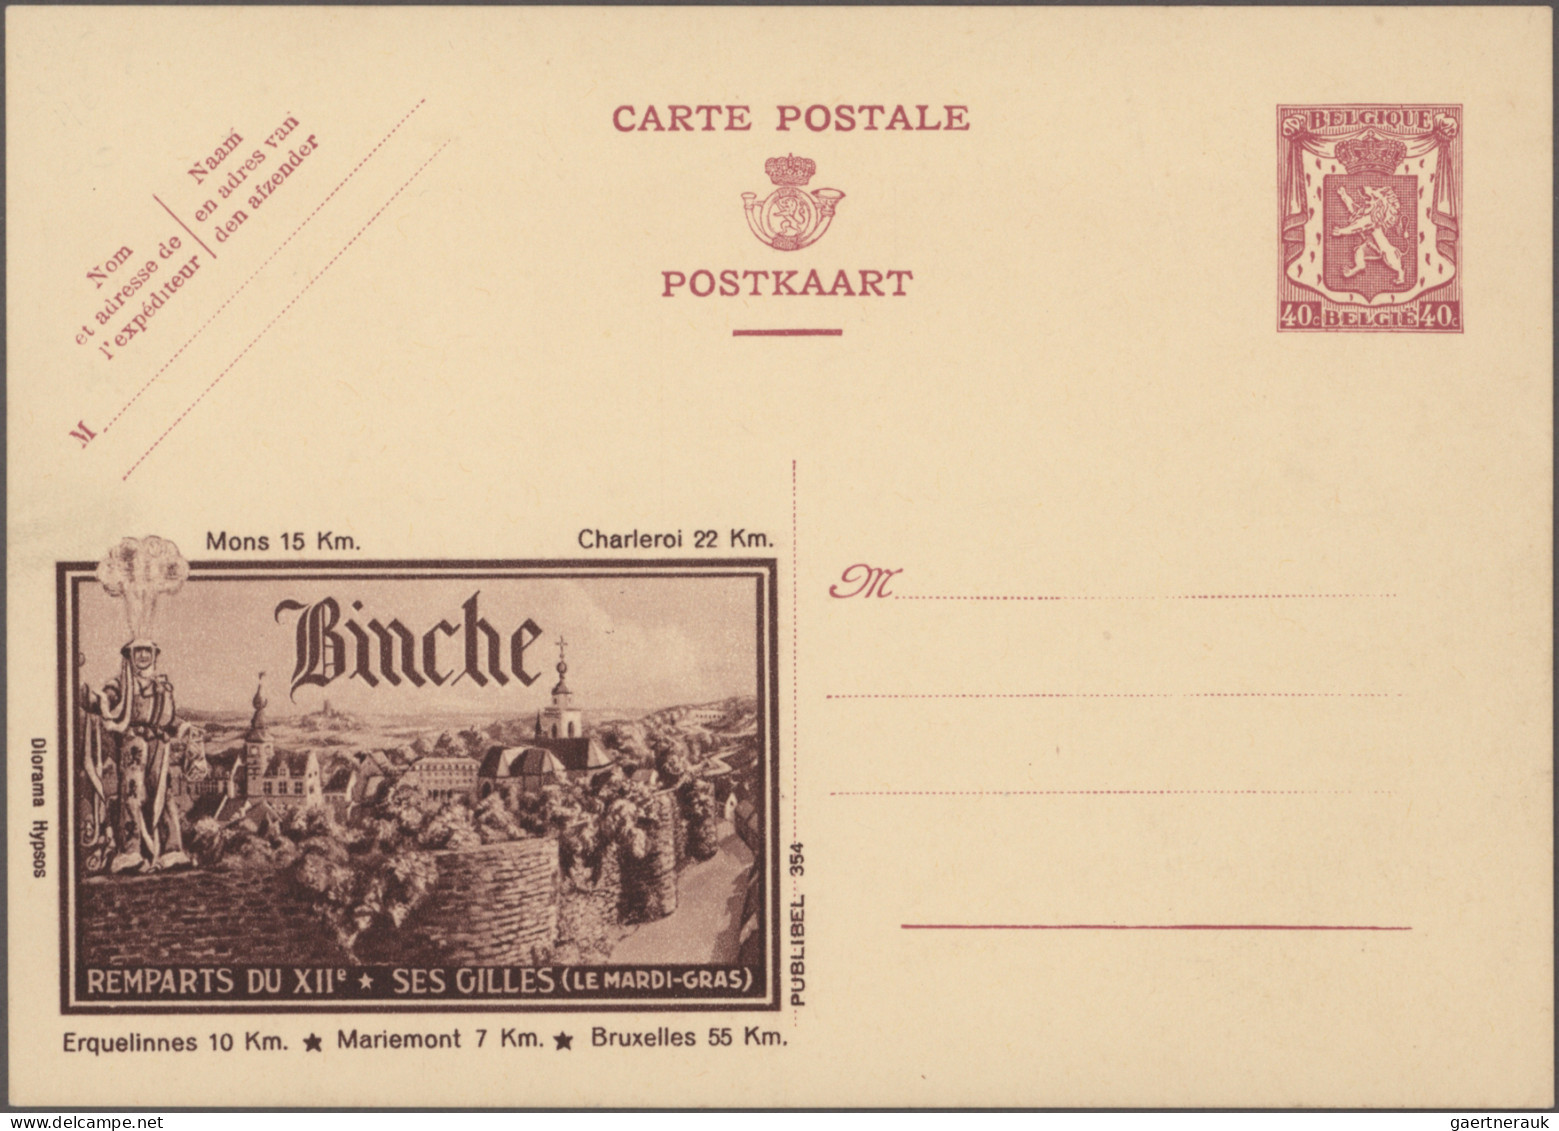 Belgium - postal stationery: 1933/1963, postal stationery picture postcards - pu